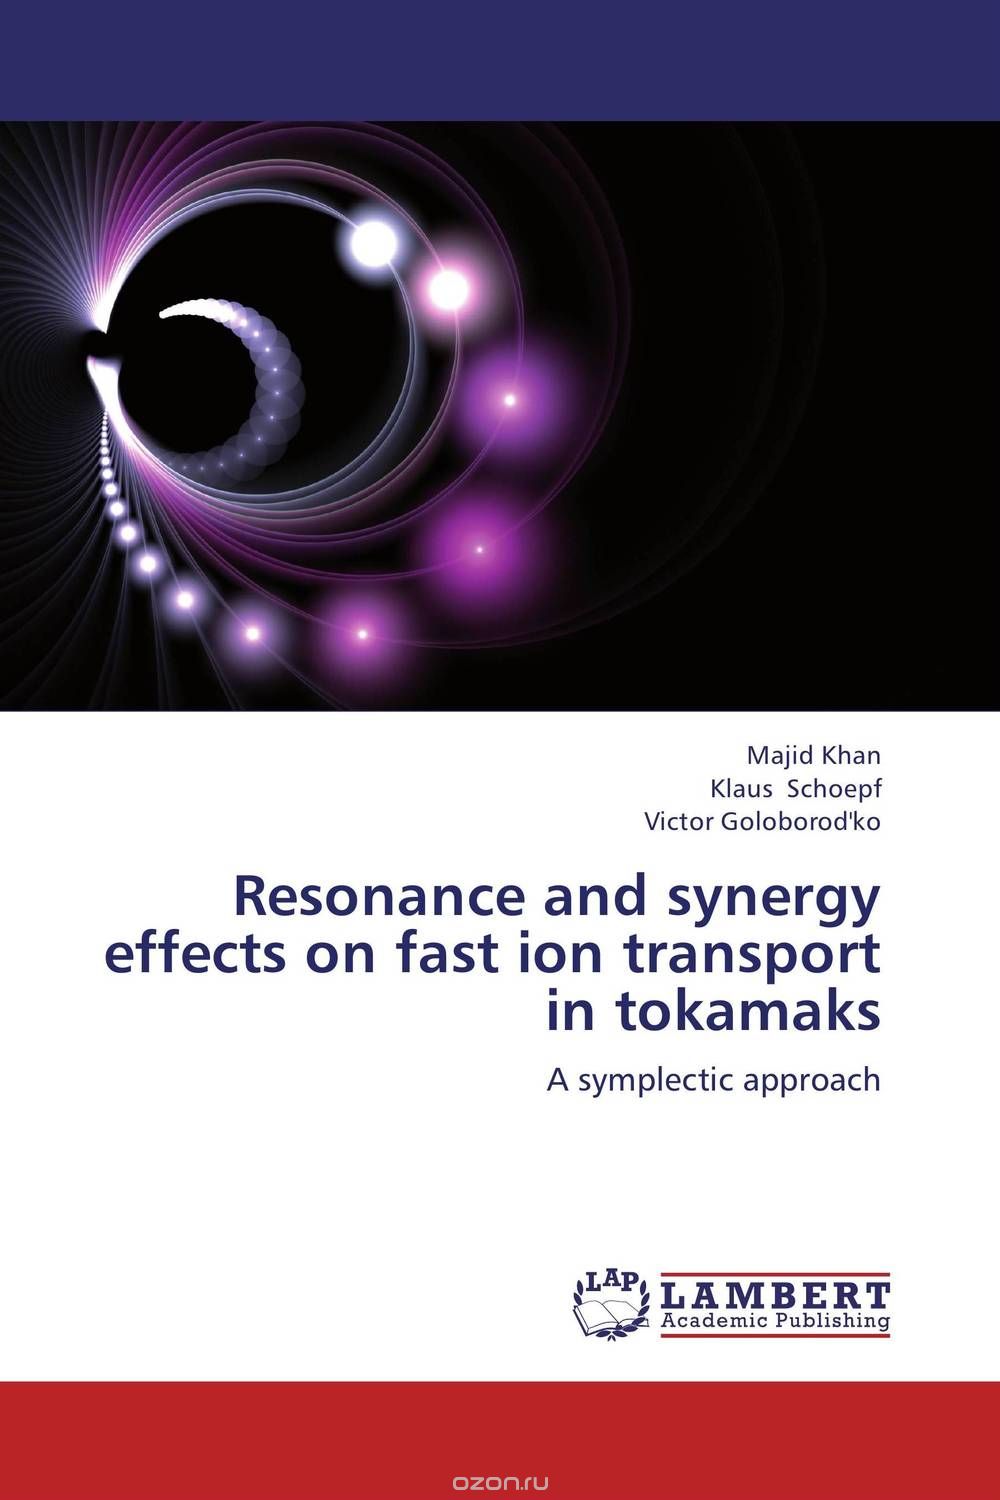 Скачать книгу "Resonance and synergy effects on fast ion transport in tokamaks"